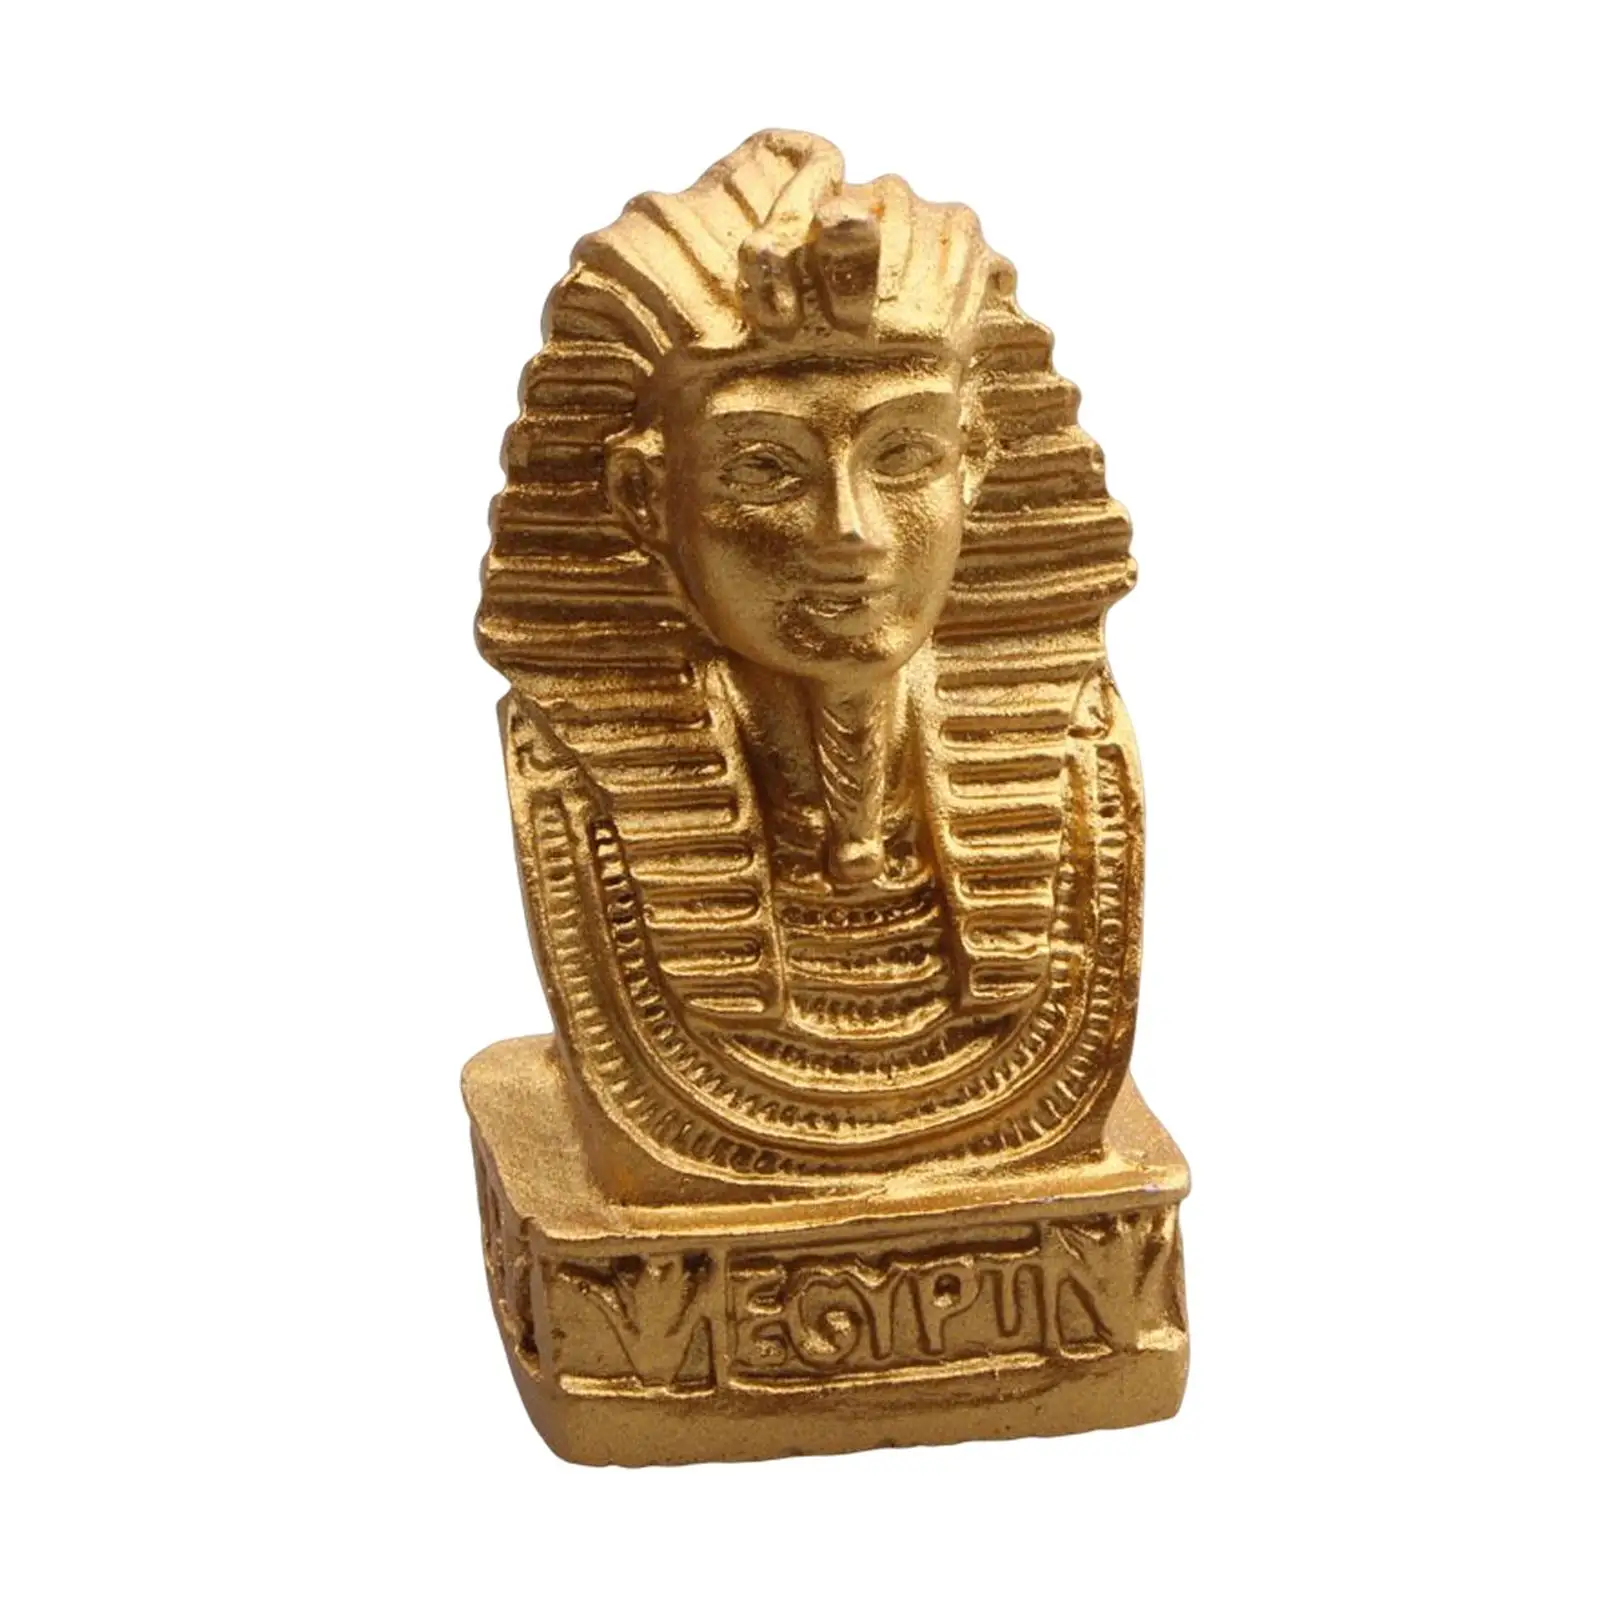 

Vintage Egypt Queen Statue Resin Crafts Sculpture Figurines Artware Collectible for Shelf Desktop Living Room Office Ornament